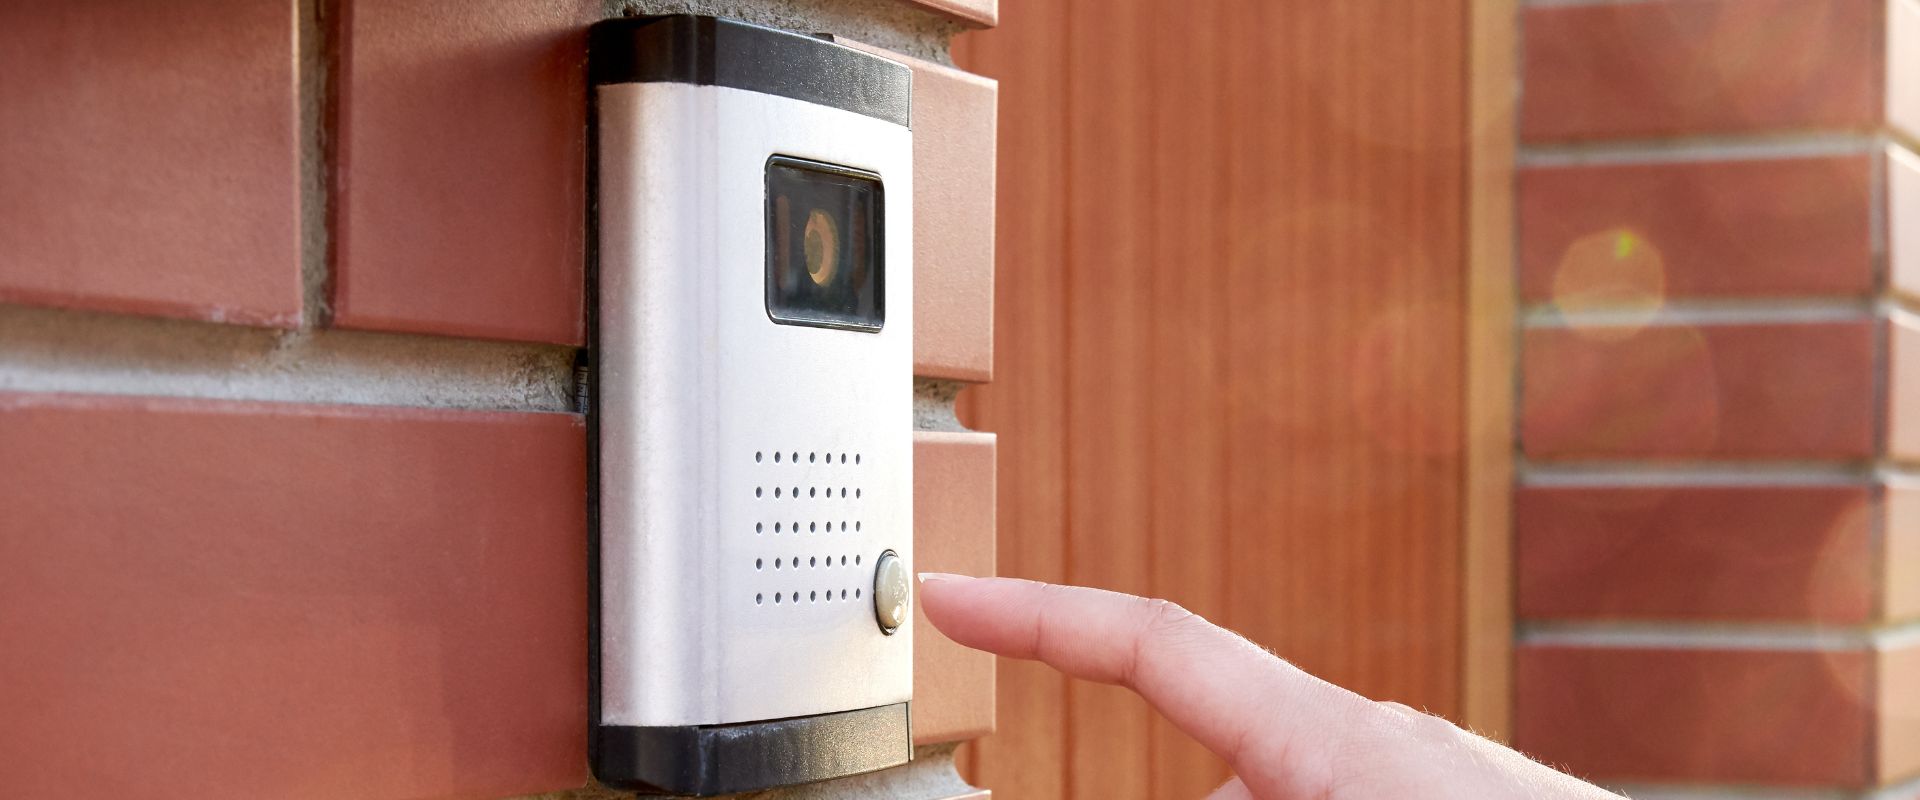 woman pressing a doorbell camera button